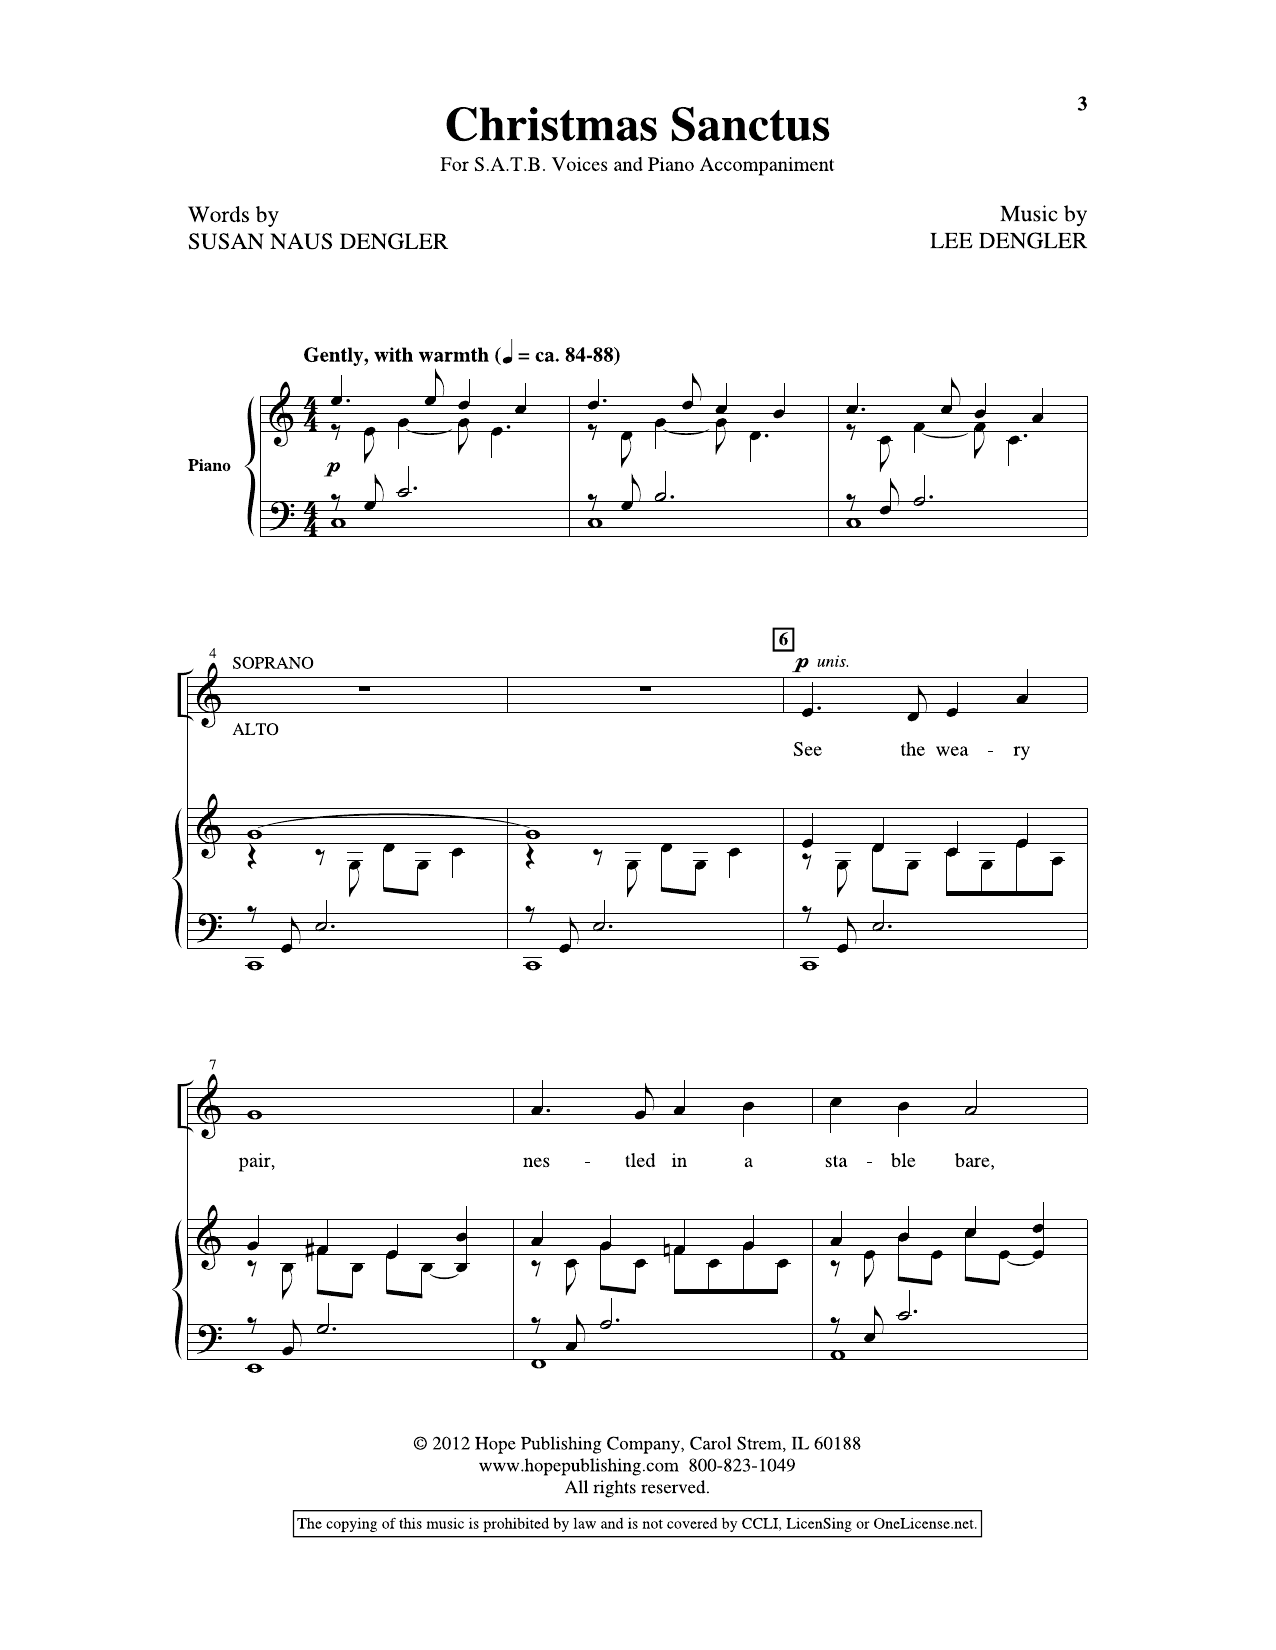 Download Lee Dengler Christmas Sanctus Sheet Music and learn how to play SAB Choir PDF digital score in minutes